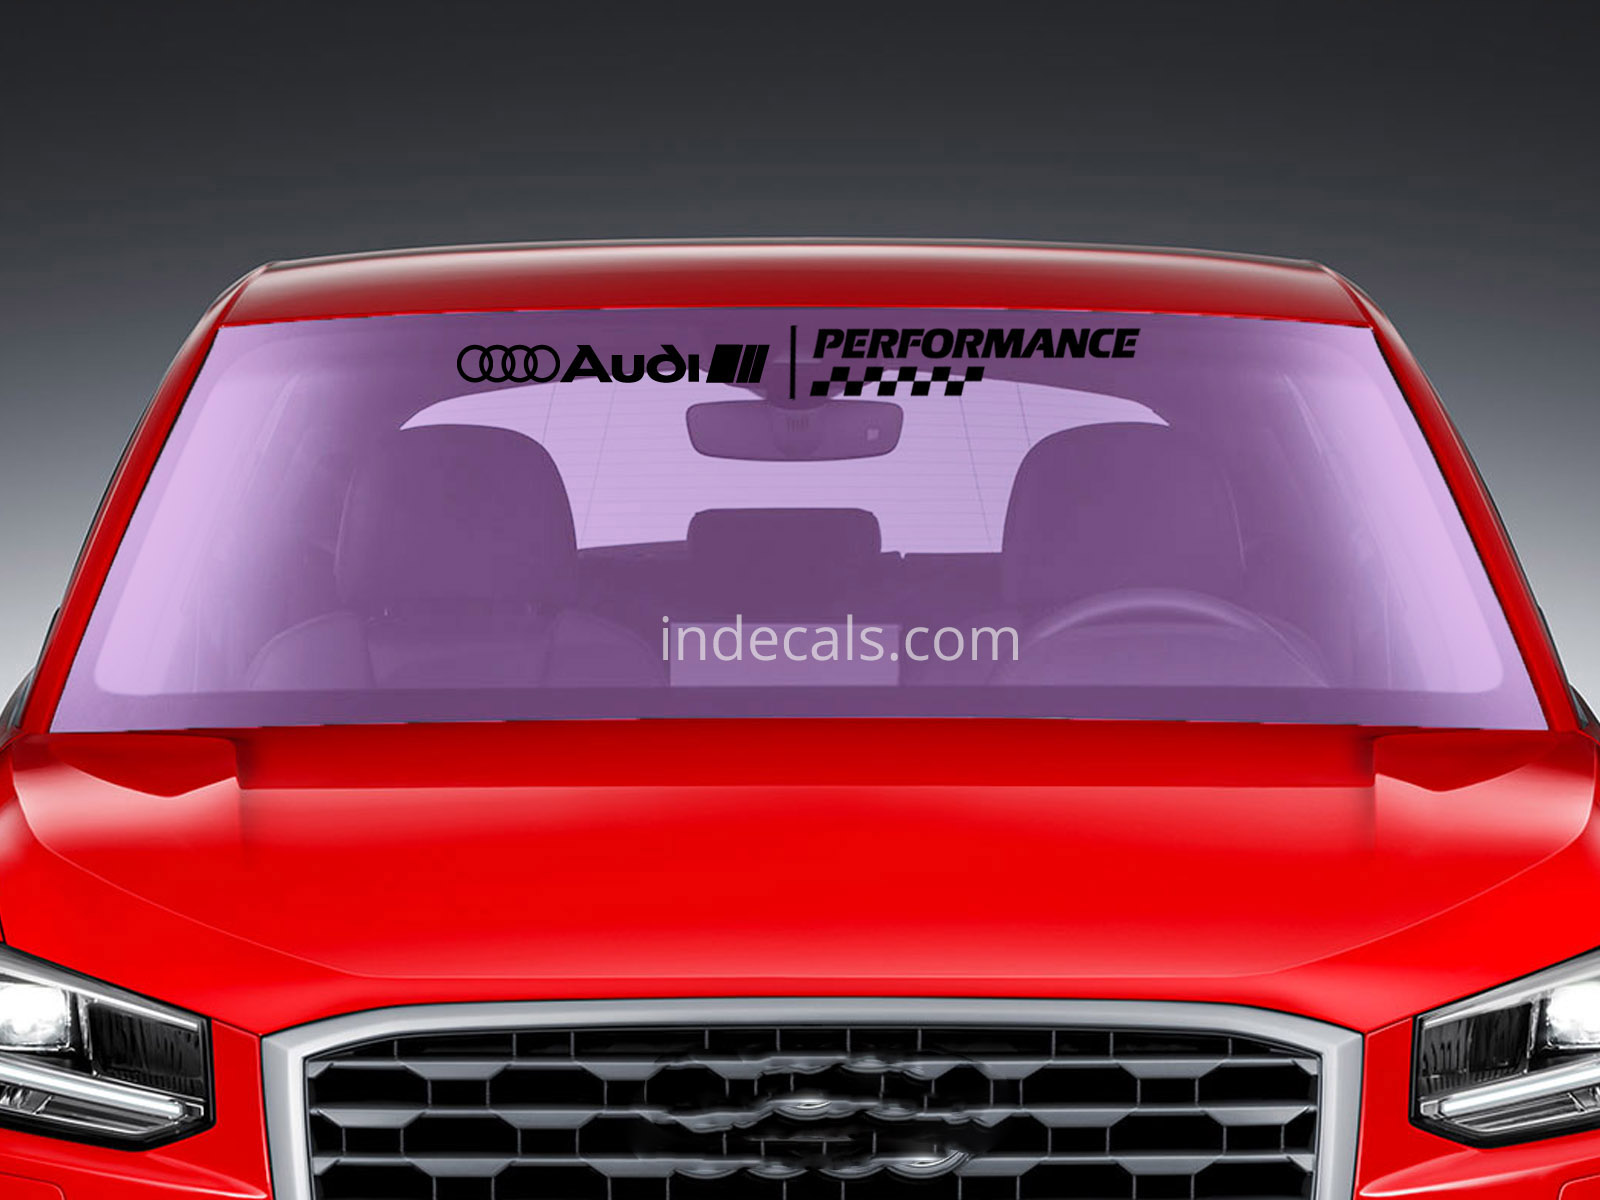 1 x Audi Performance Sticker for Windshield or Back Window - Black 